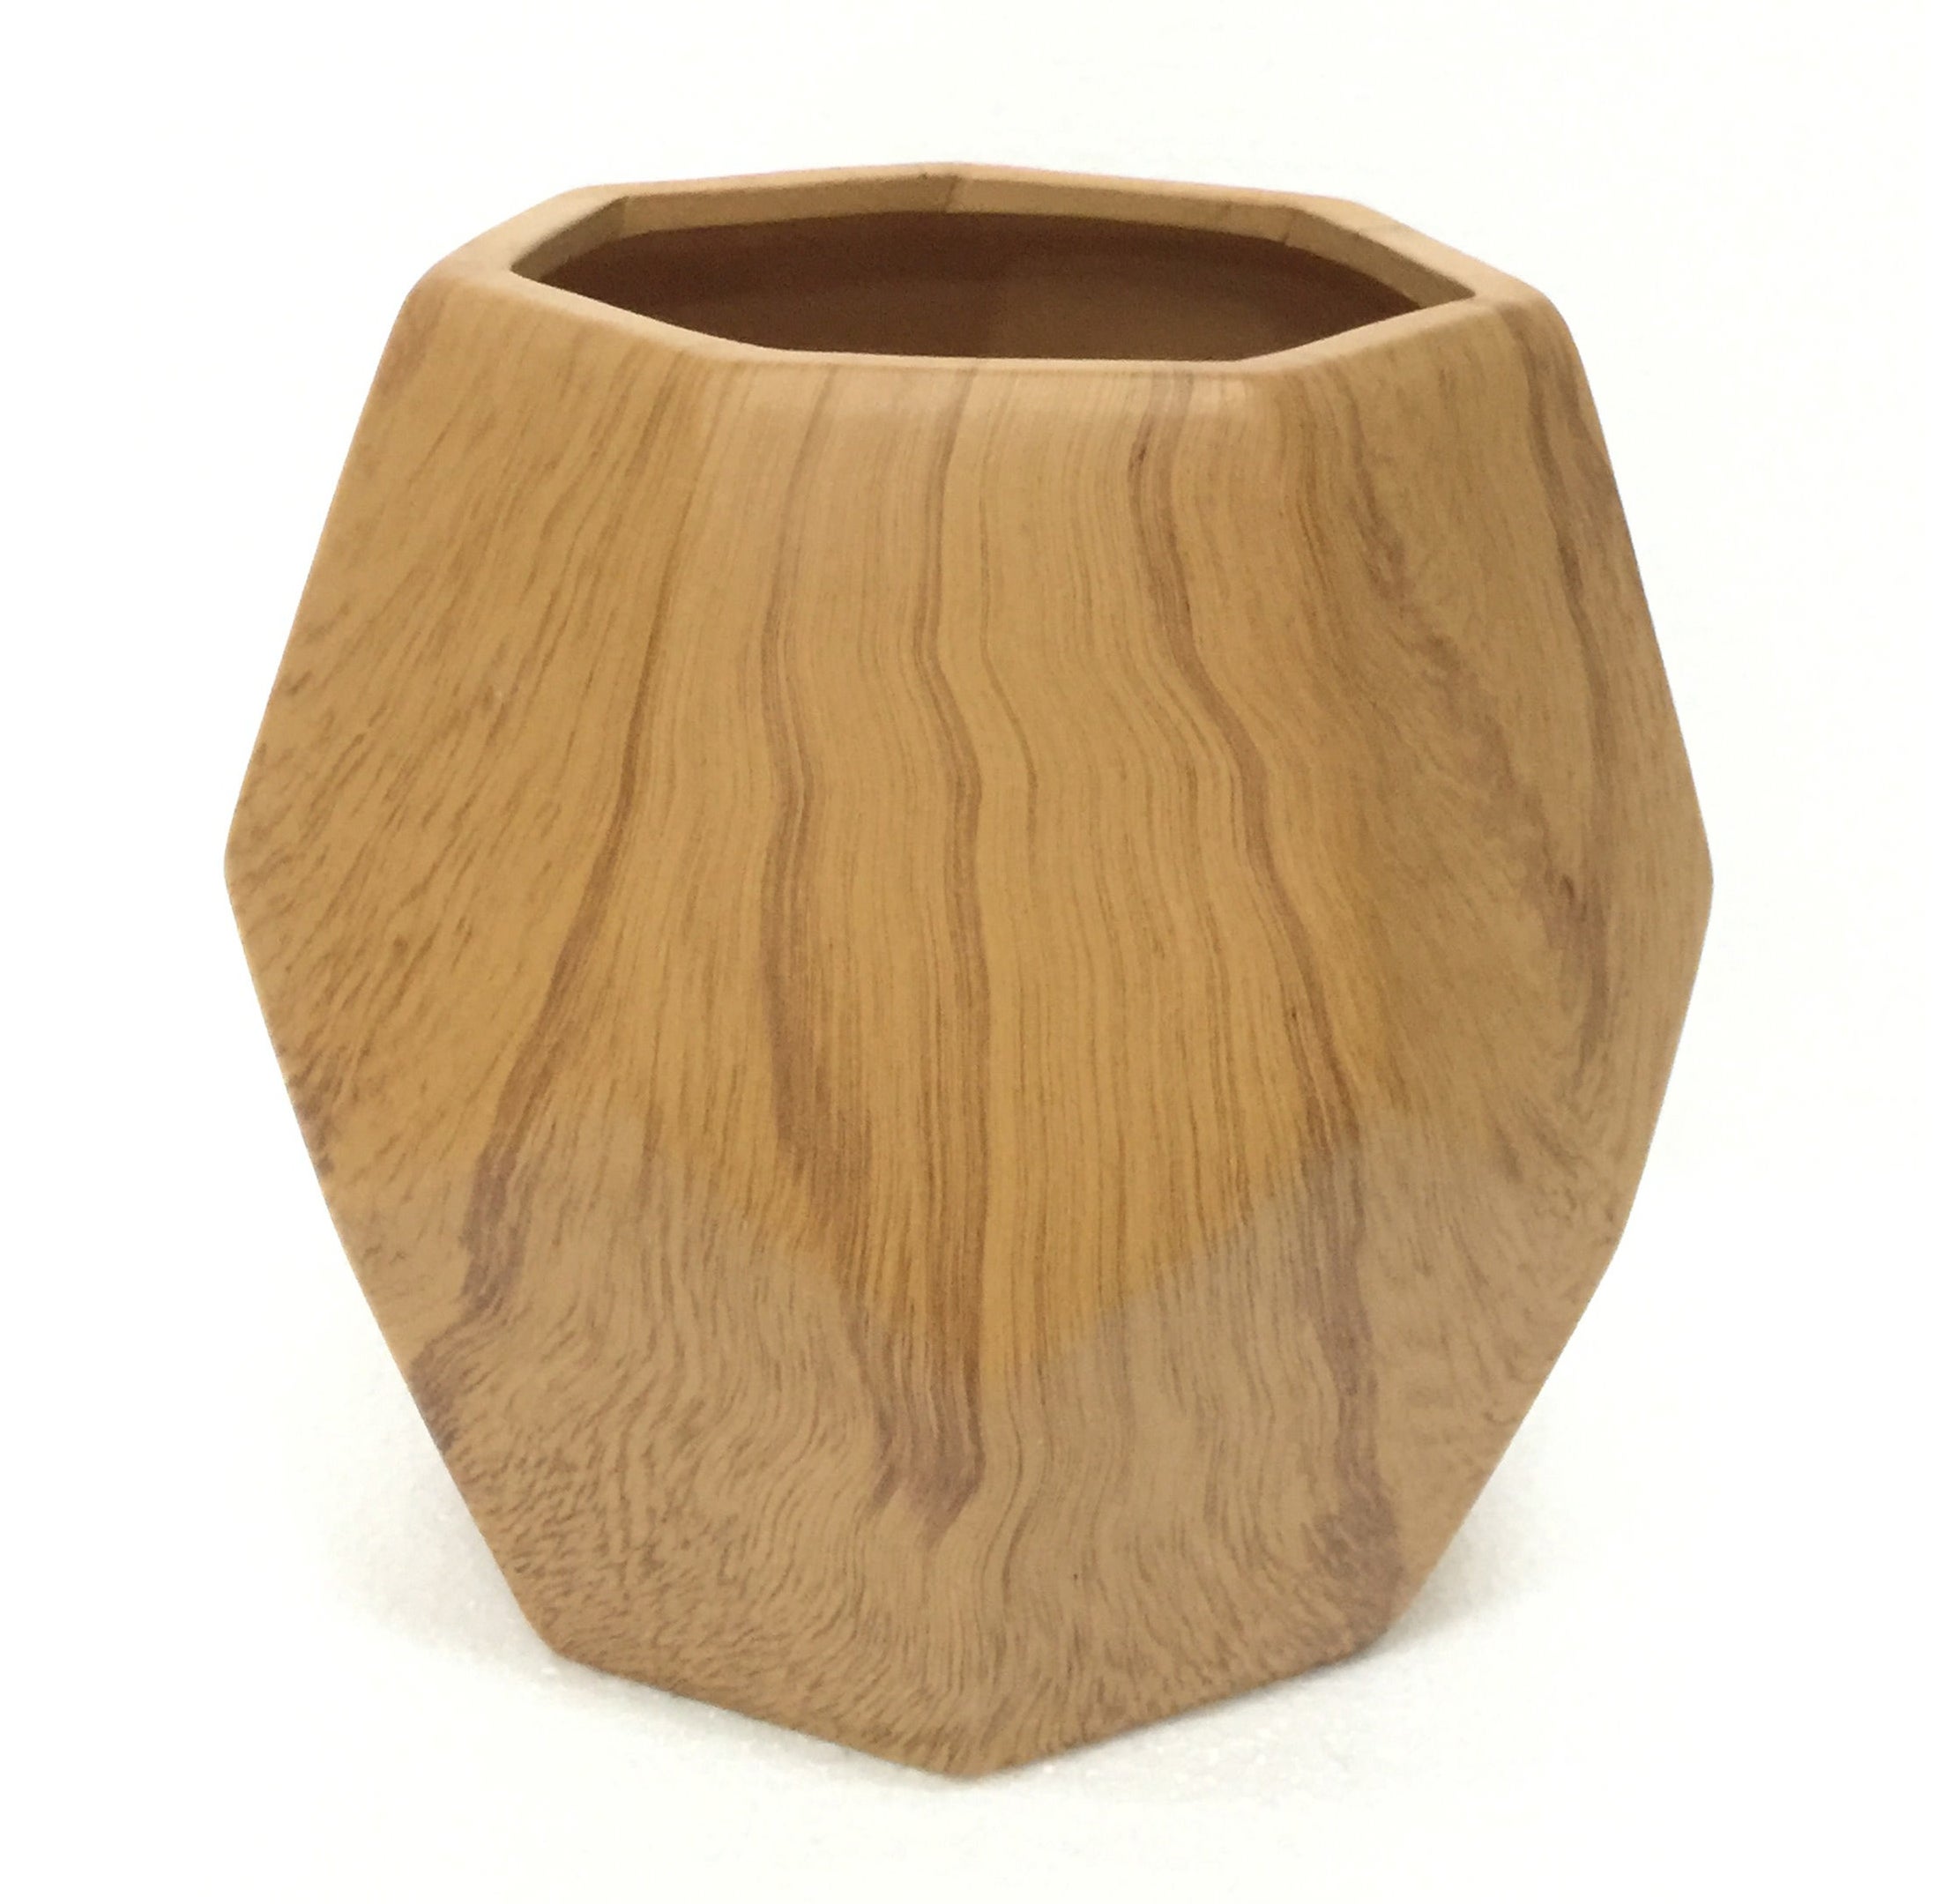 a faux wood ceramic pot